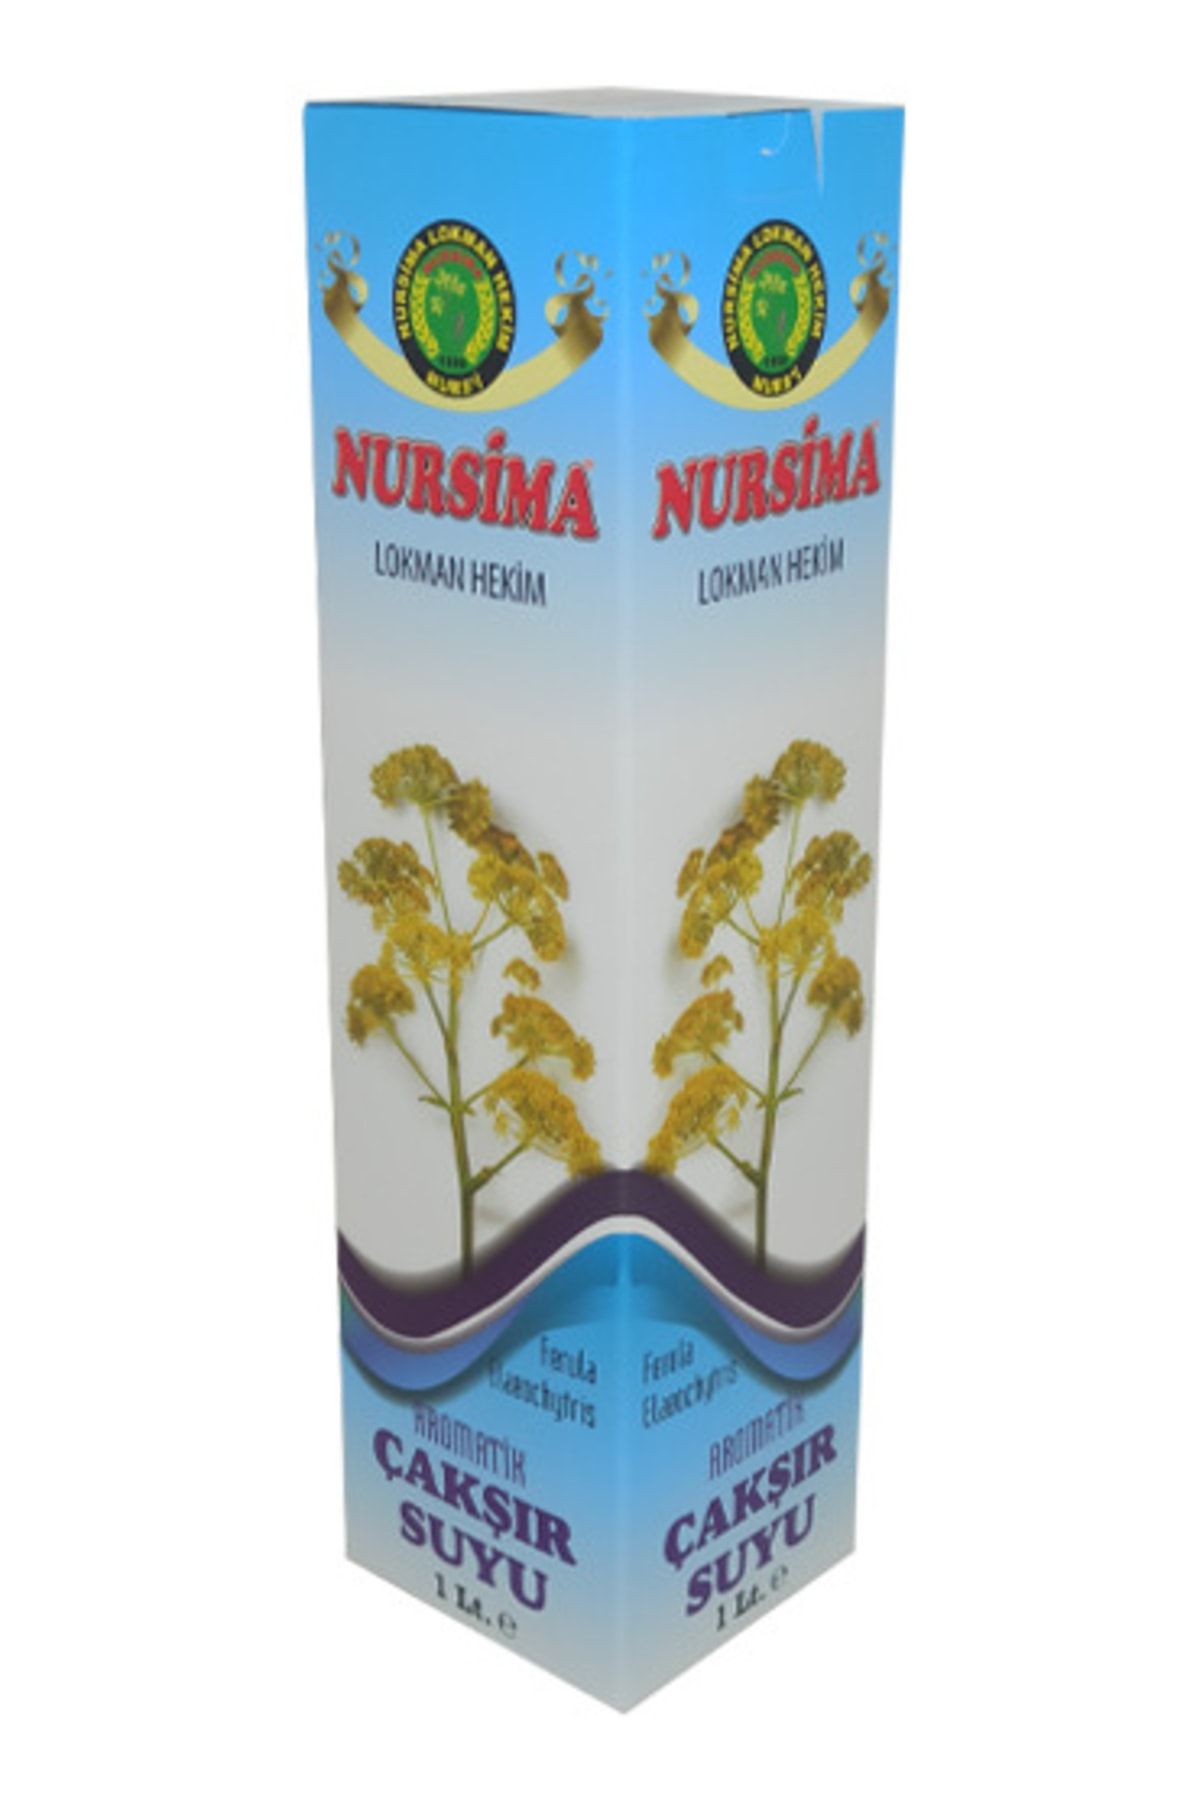 Nursima Aromatik Çakşır Suyu 1 Lt